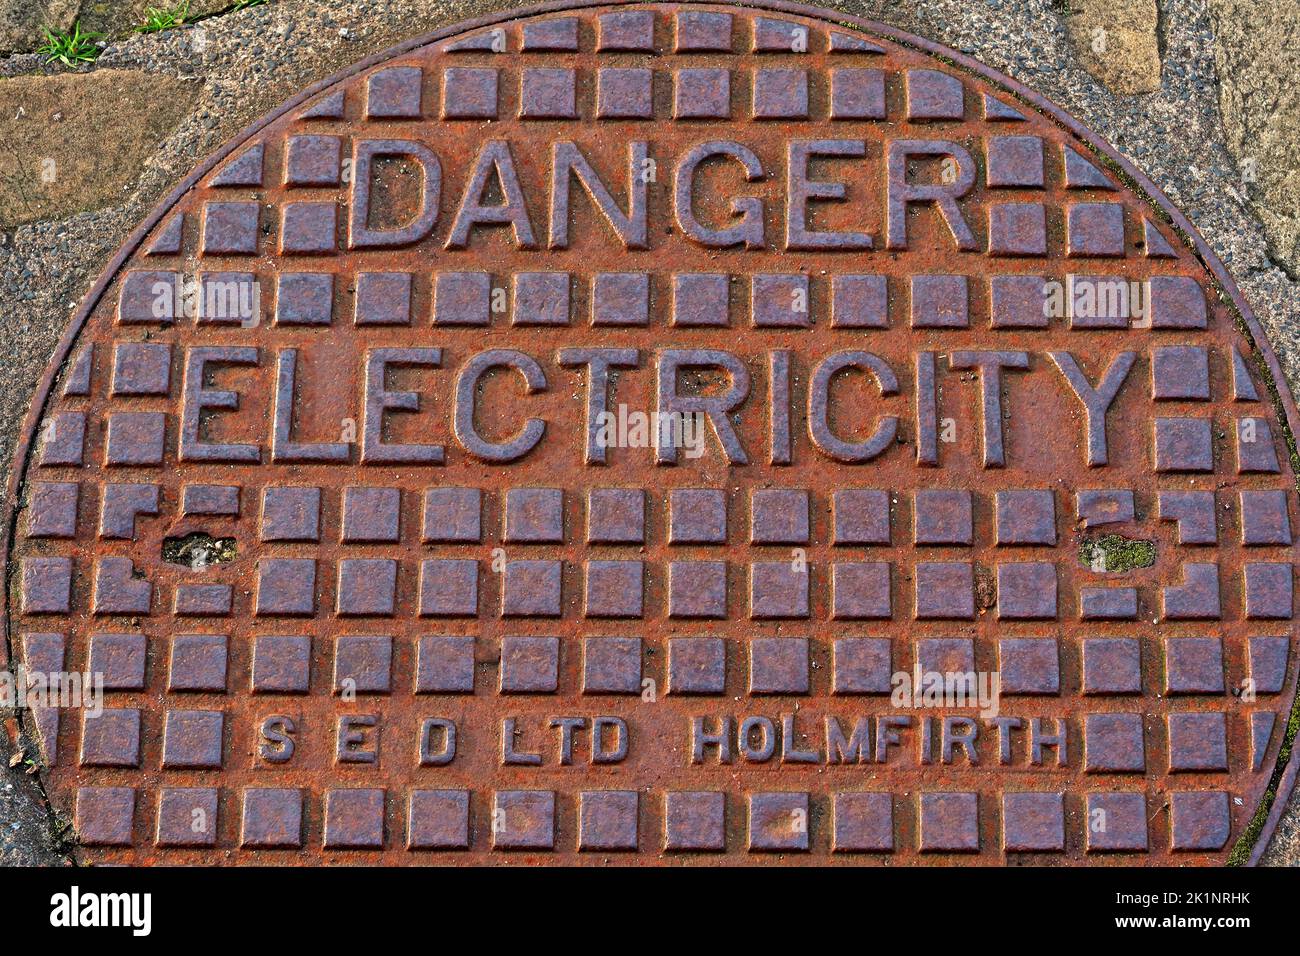 Iron grid, Danger Electricity, SED ltd , Holmfirth, Yorkshire, West Yorkshire, England, UK Stock Photo